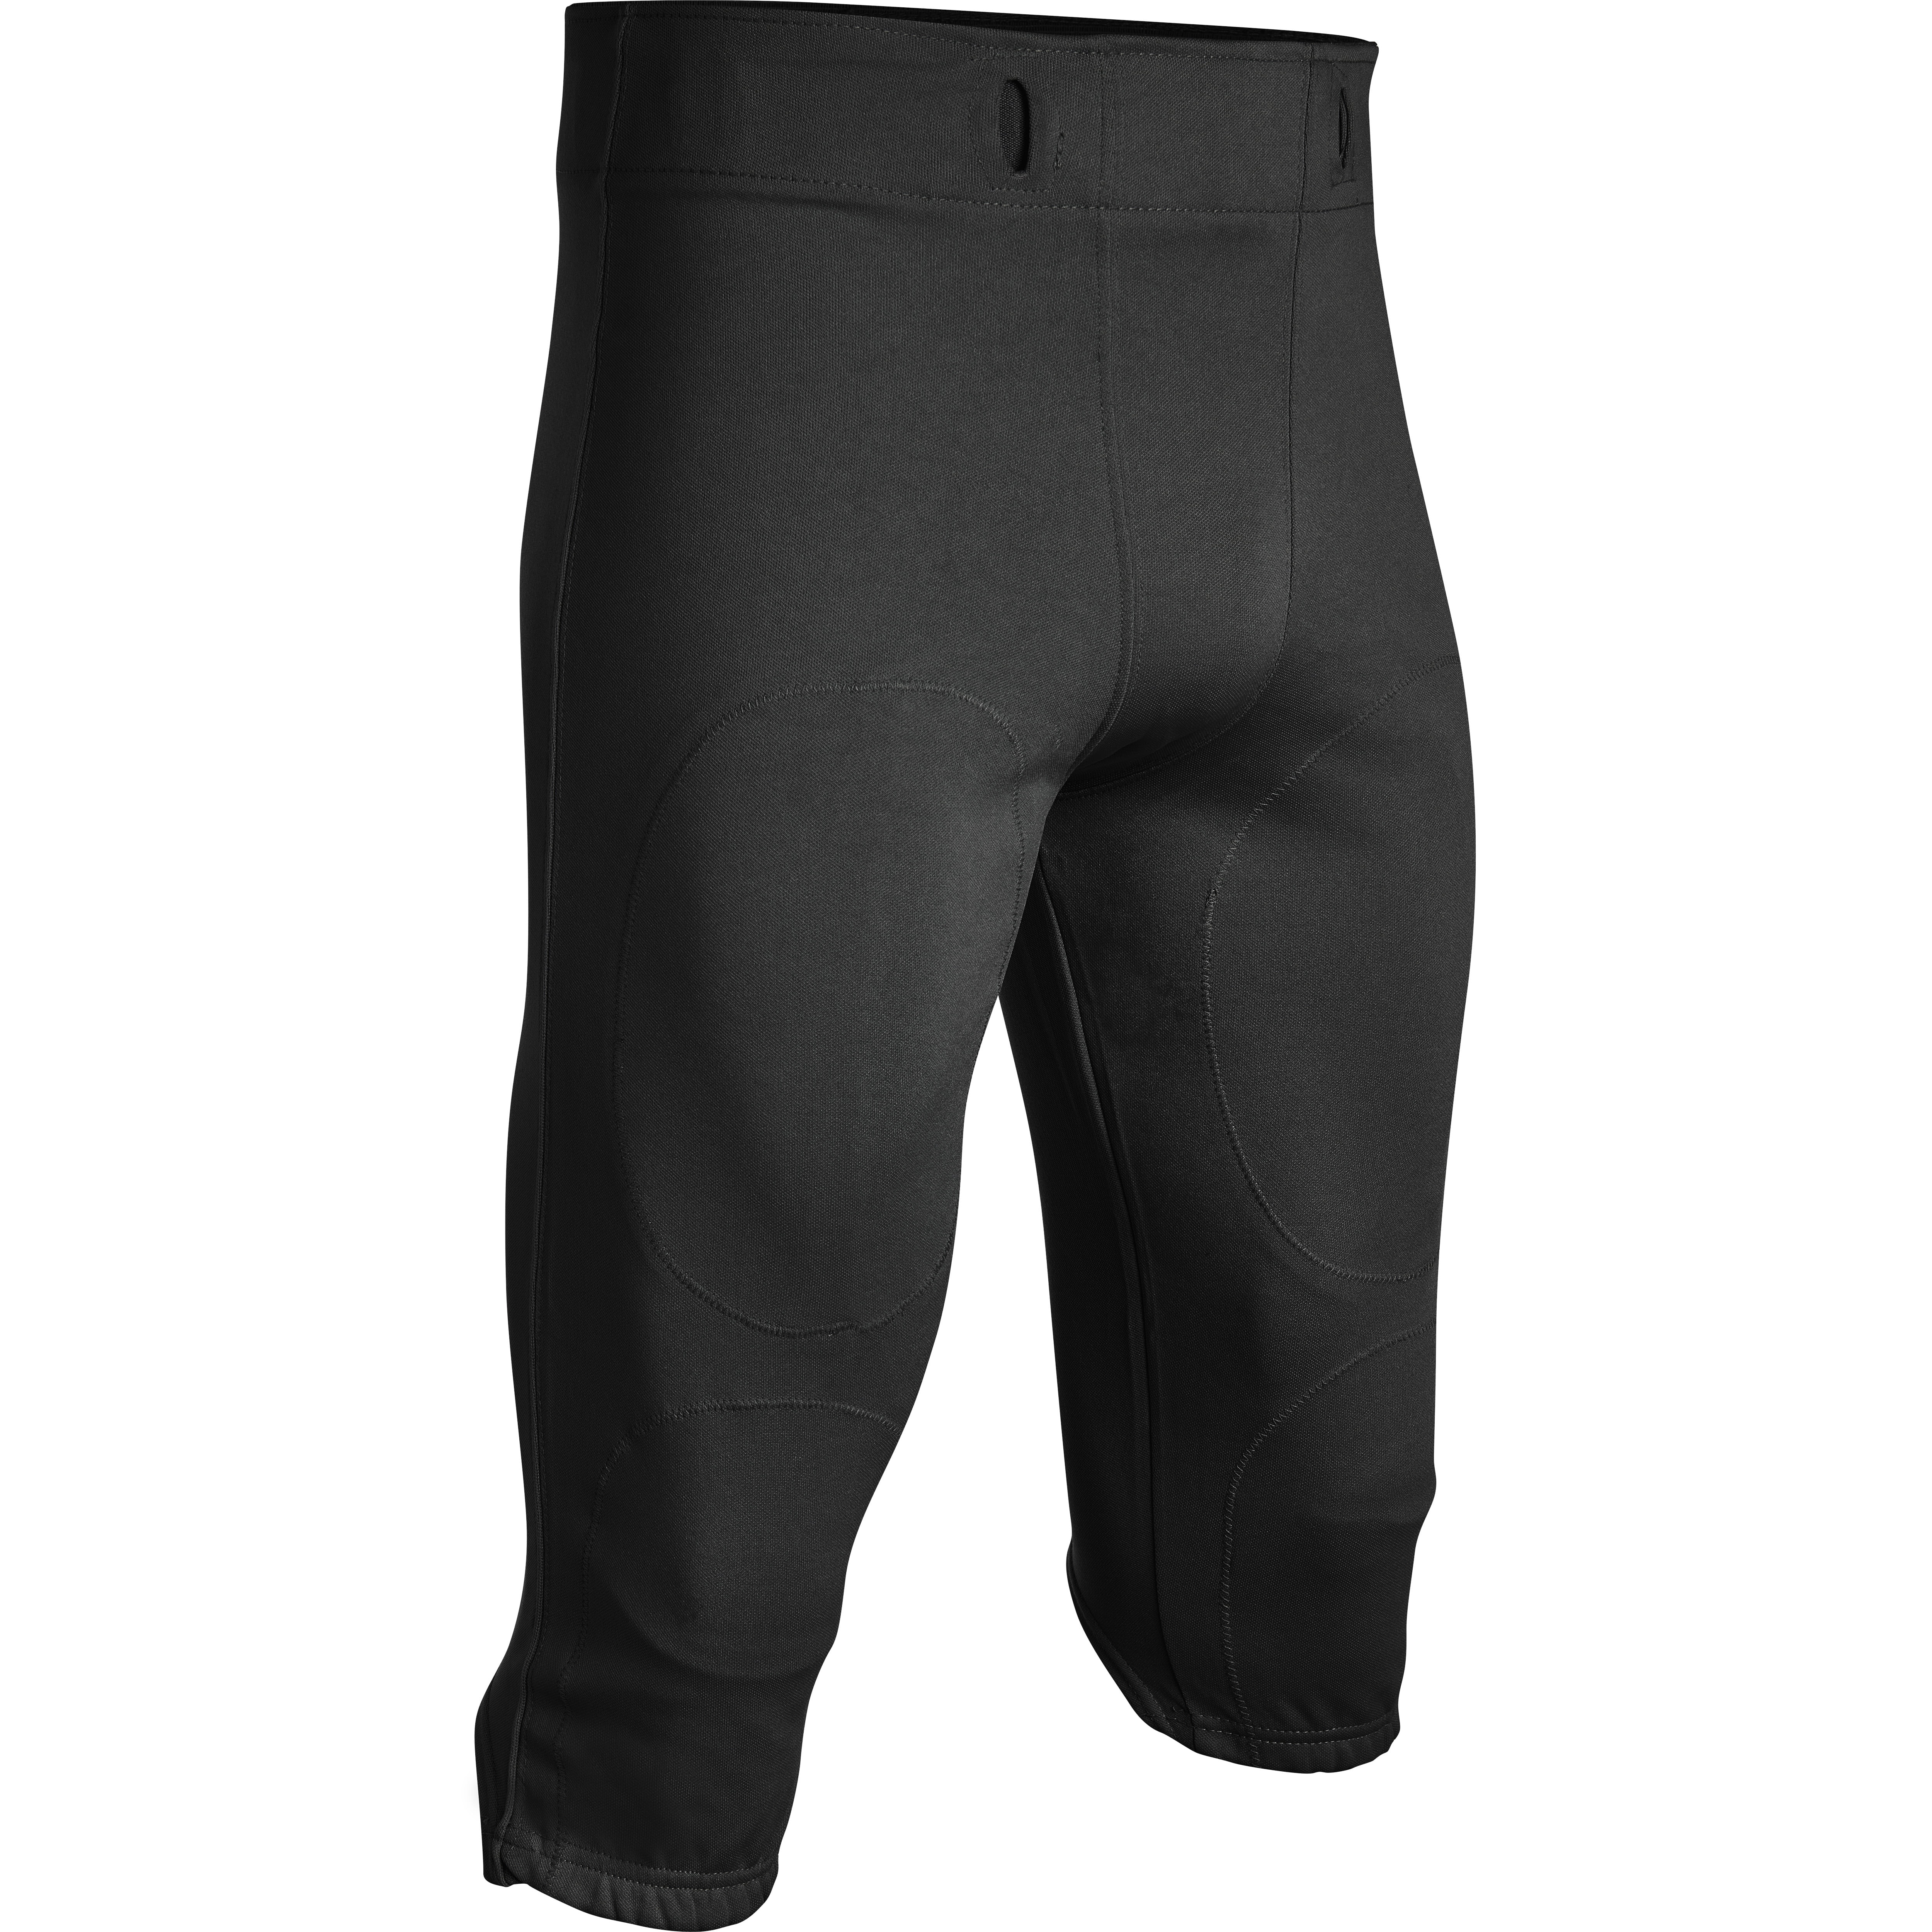 Touchback Football Practice Pants, Adult 2X-Large, Black